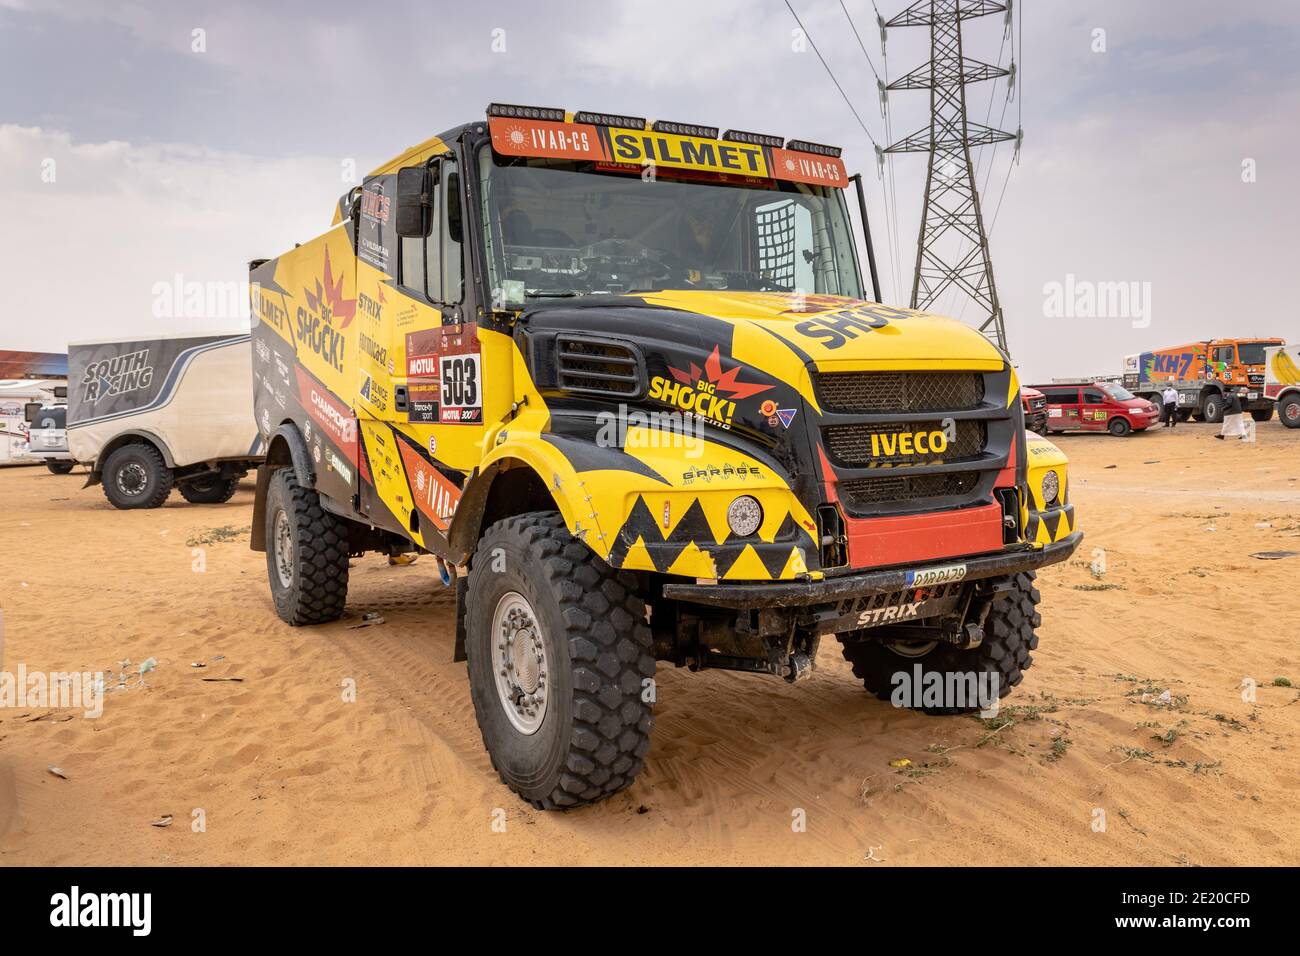 Horimlaa, Saudi Arabia - January 7, 2021: The Iveco truck of Team Big Shock Racing before the start of Stage 5 of Dakar Rally Stock Photo